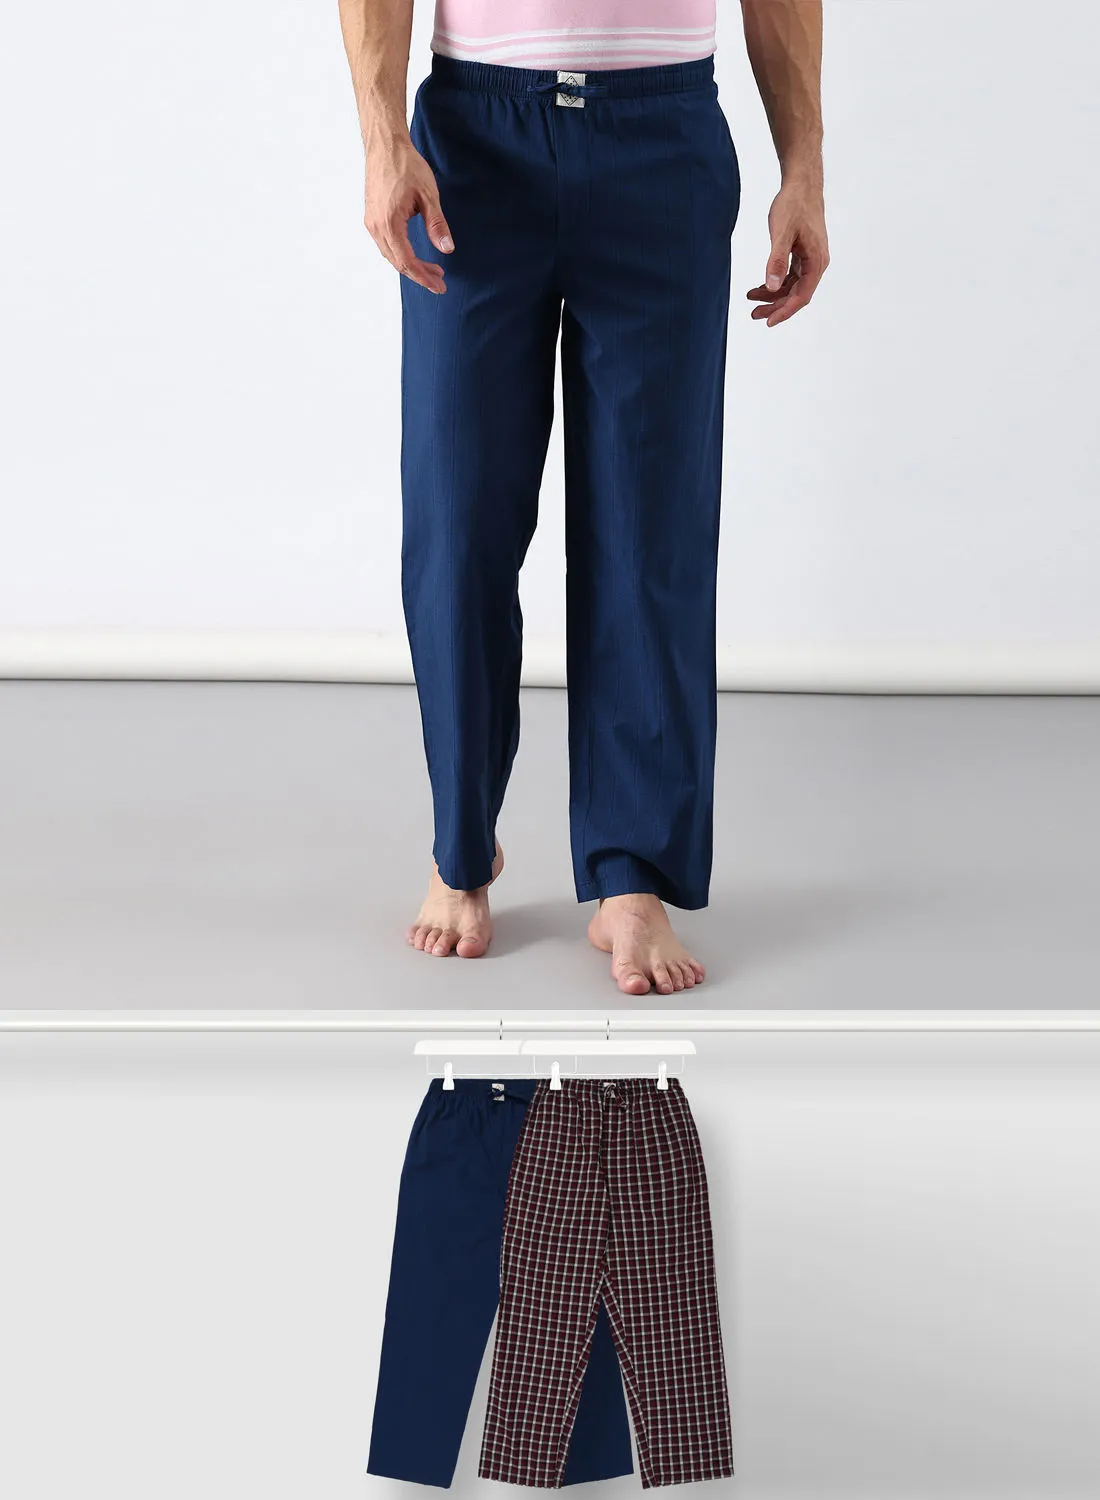 ABOF 2 Pack Lounge Pants Sets Blue/Brown